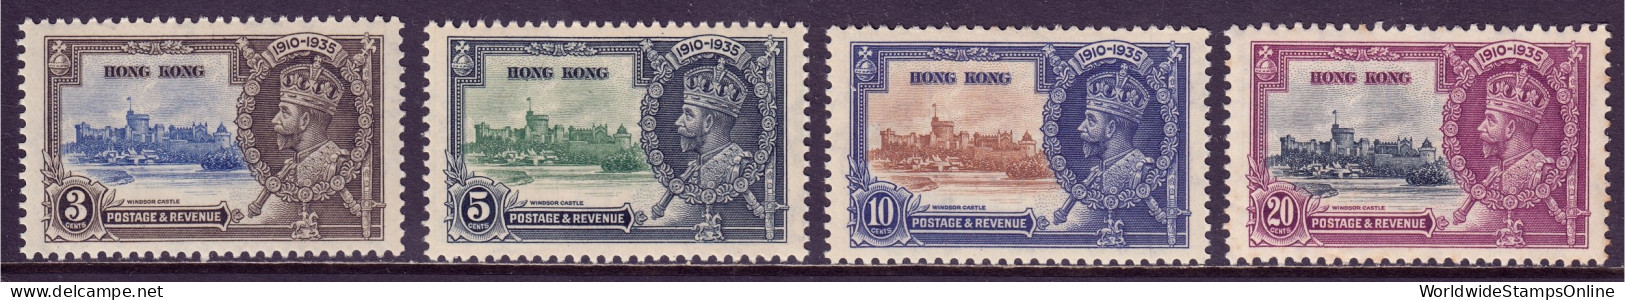 Hong Kong - Scott #147-150 - MNH/MH - See Descripton - SCV $163 - Unused Stamps